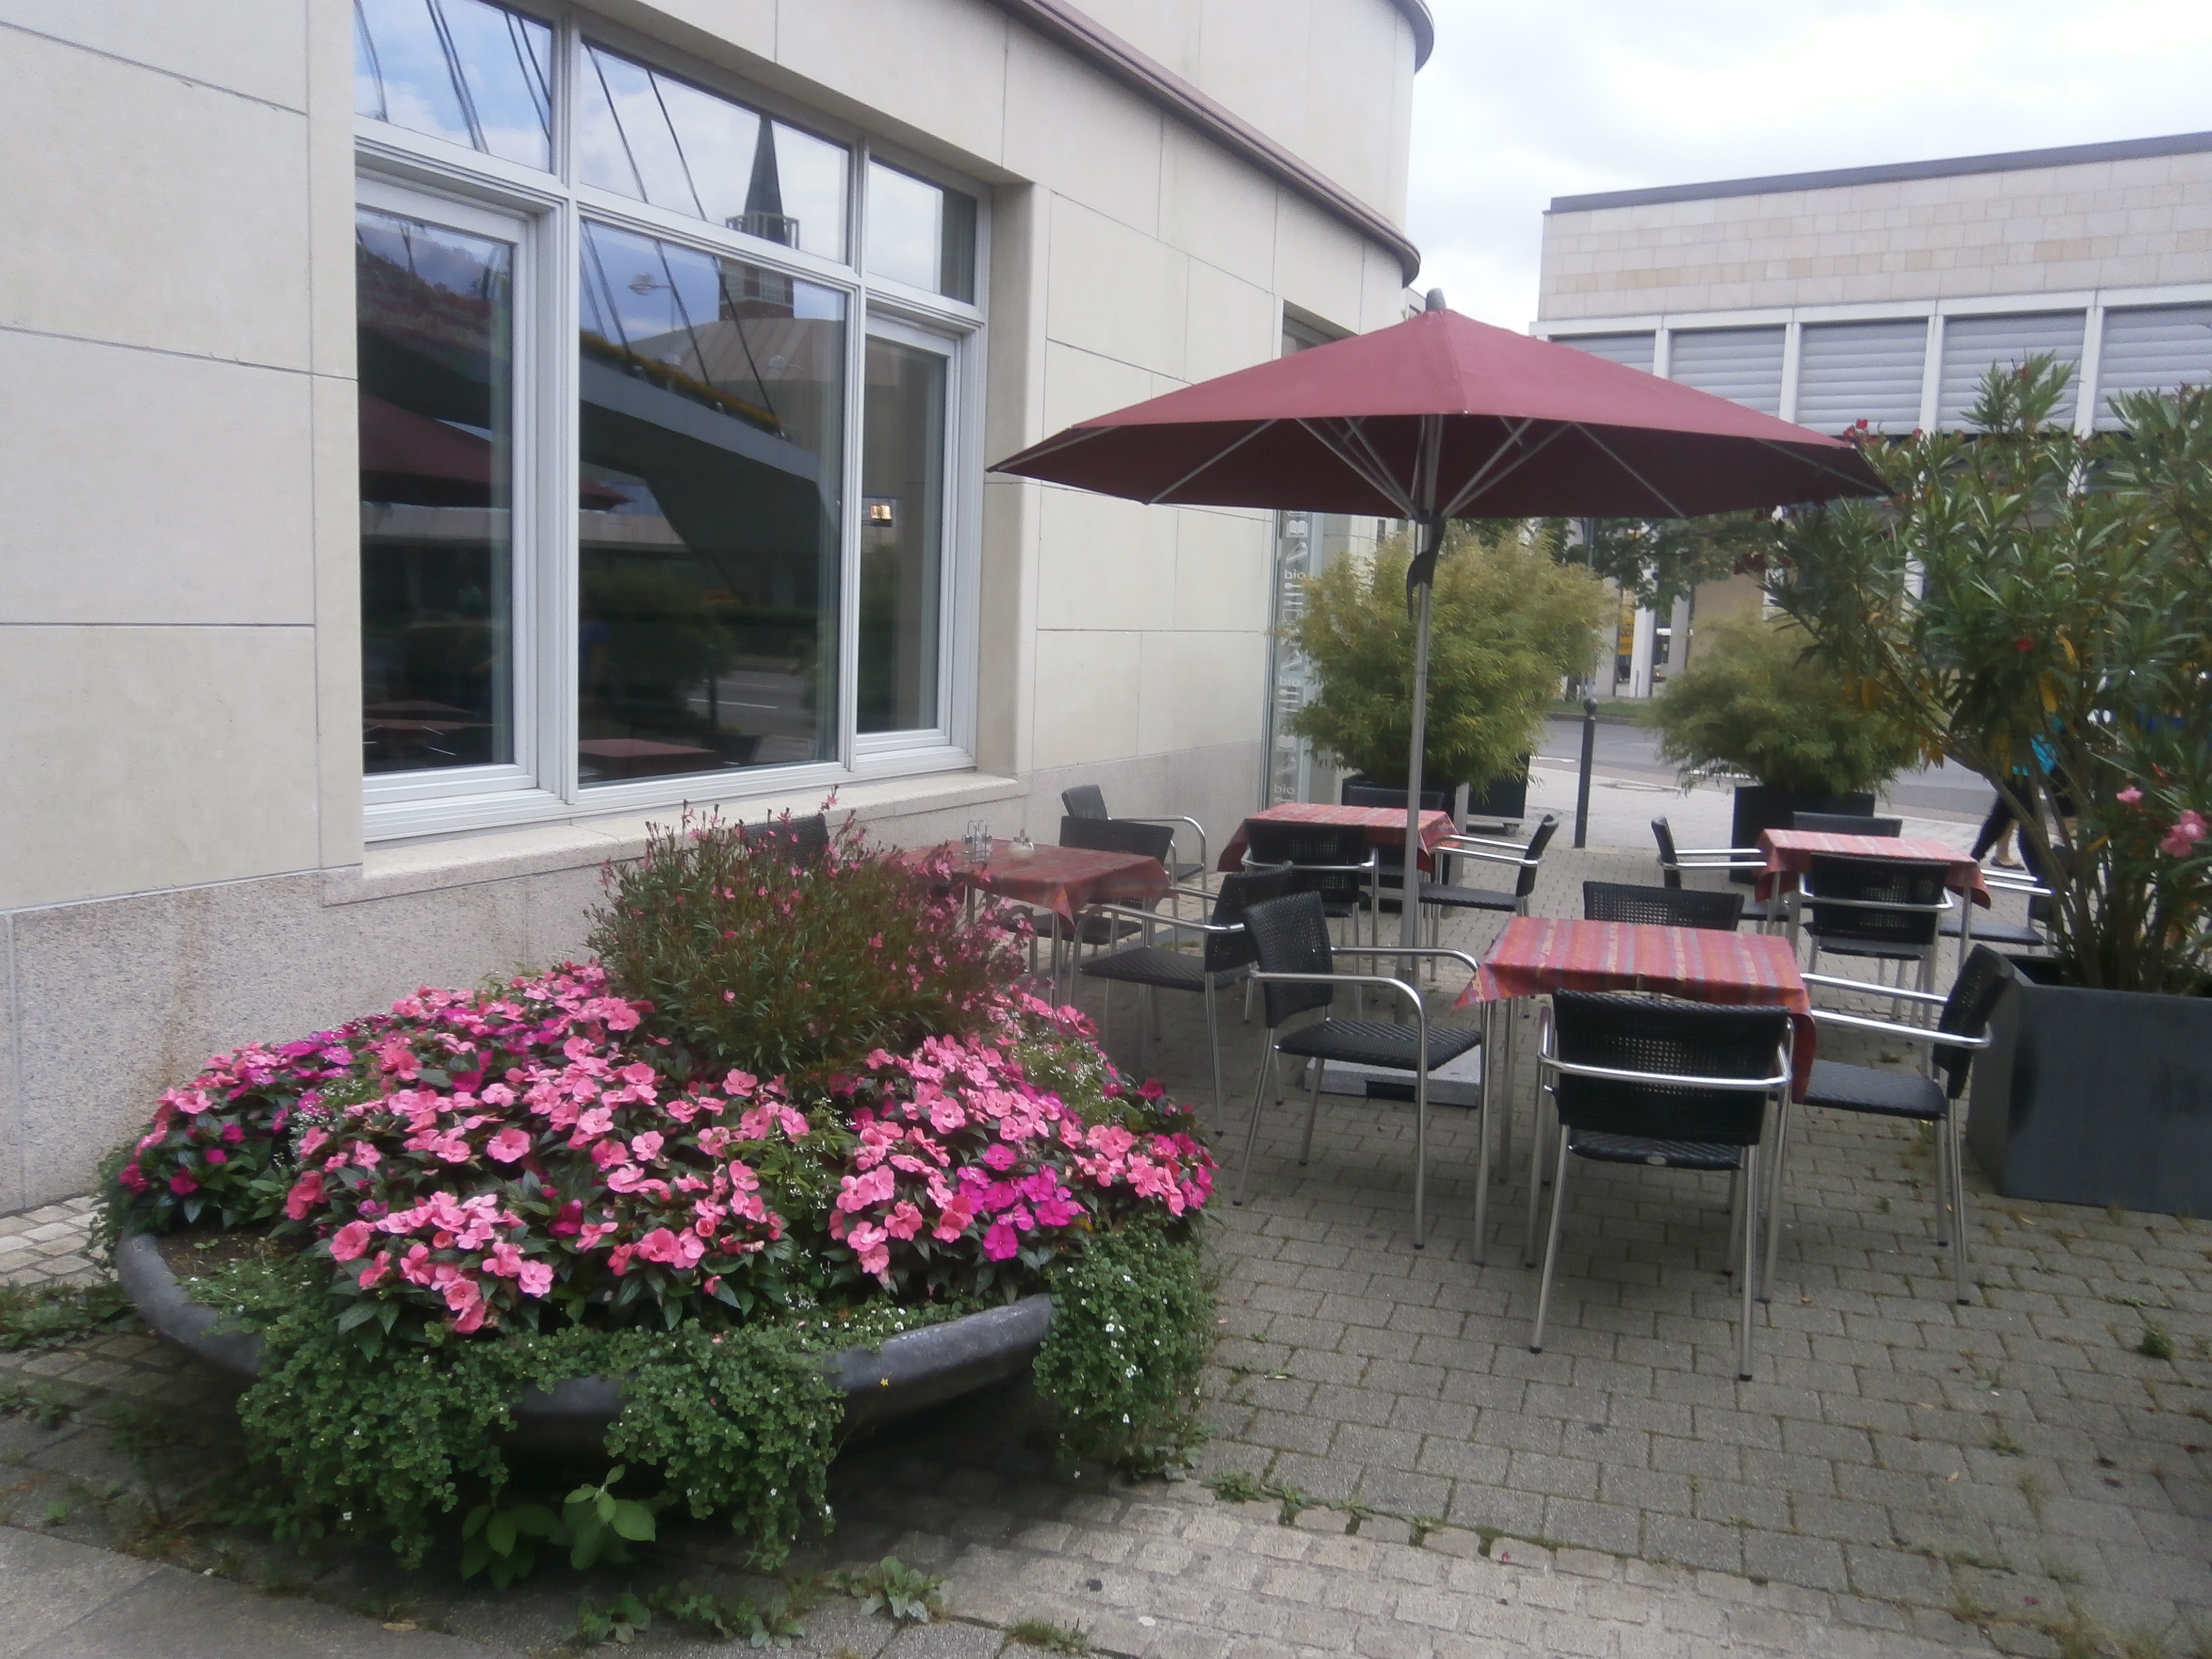 Bild 3 Prosa Café in Pforzheim